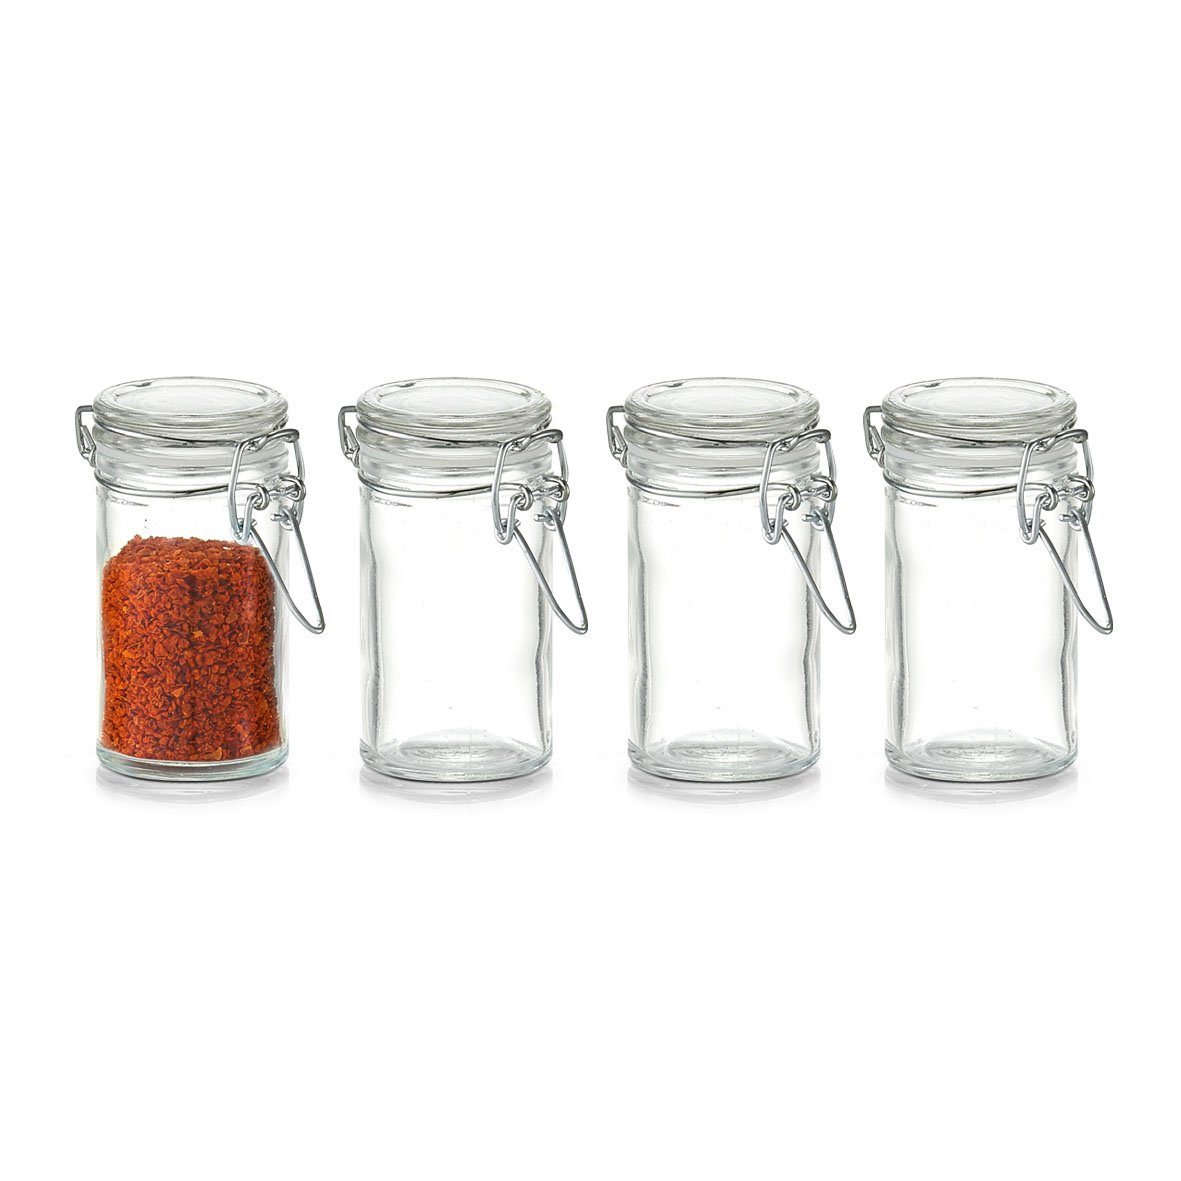 Zeller Present Gewürzbehälter Gewürzgläser-Set m. Bügelverschluss, Glas/Metall, 4-tlg., mini